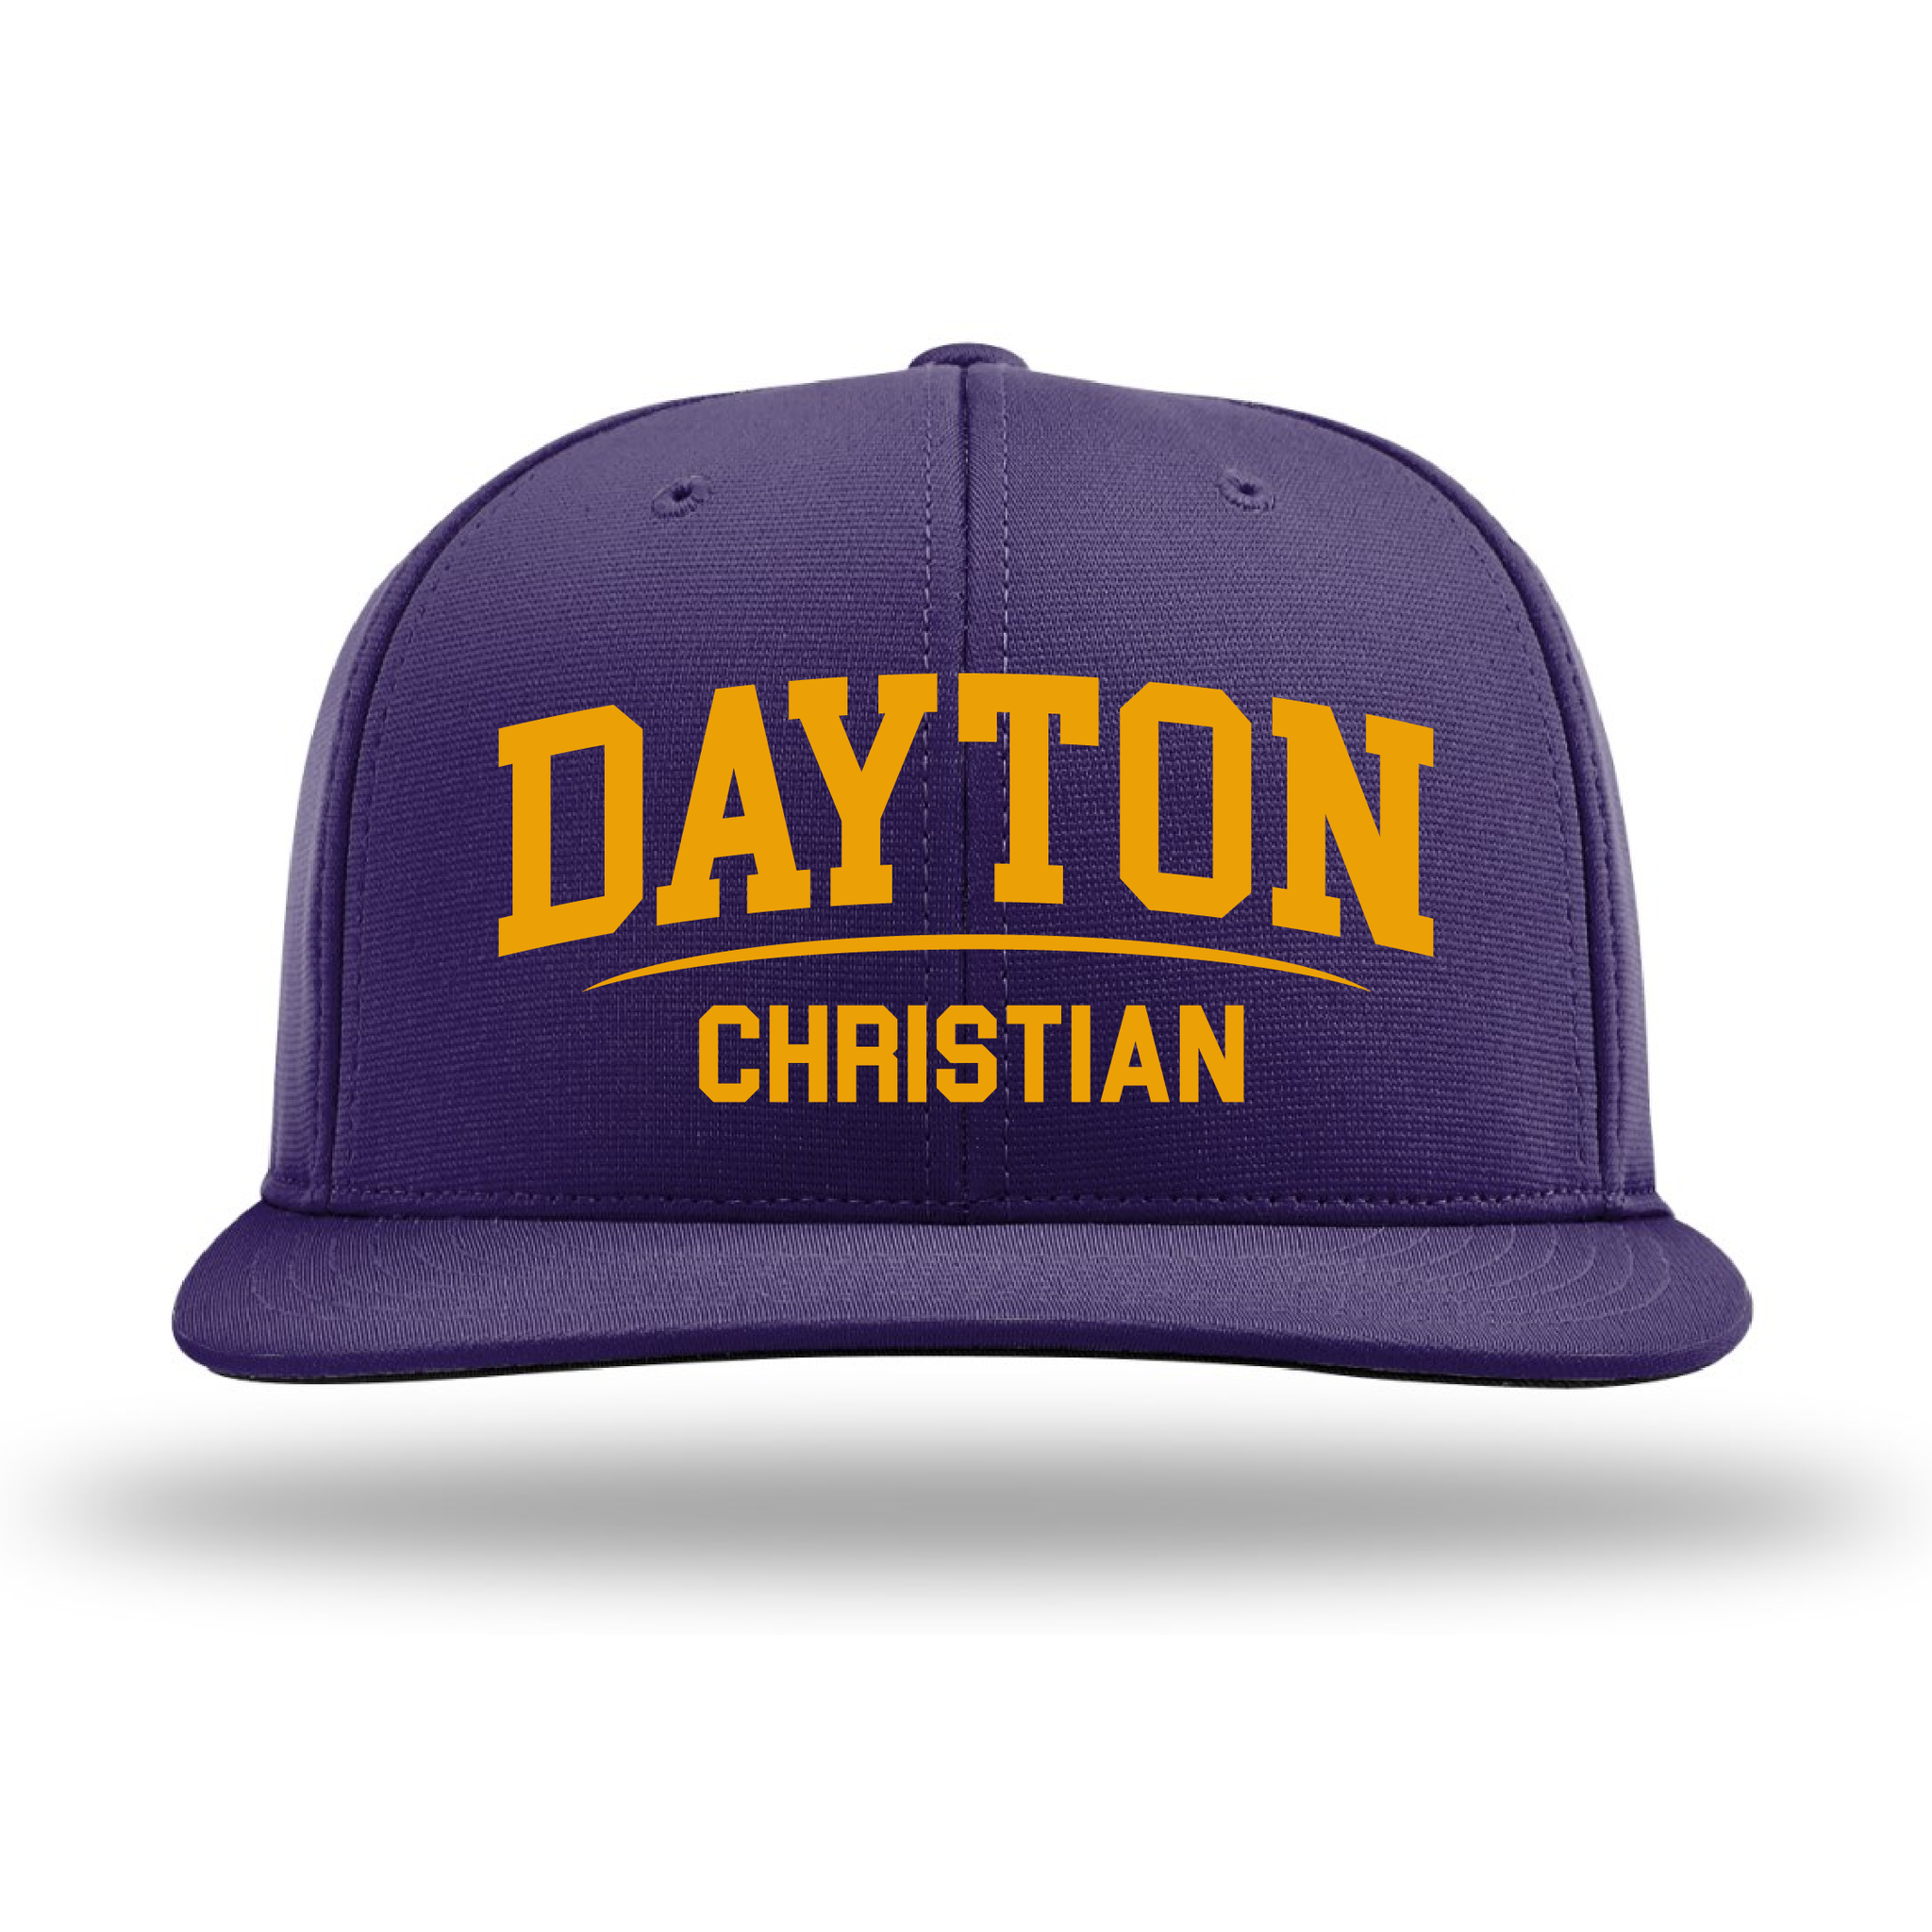 Dayton Christian Flex-Fit Hat